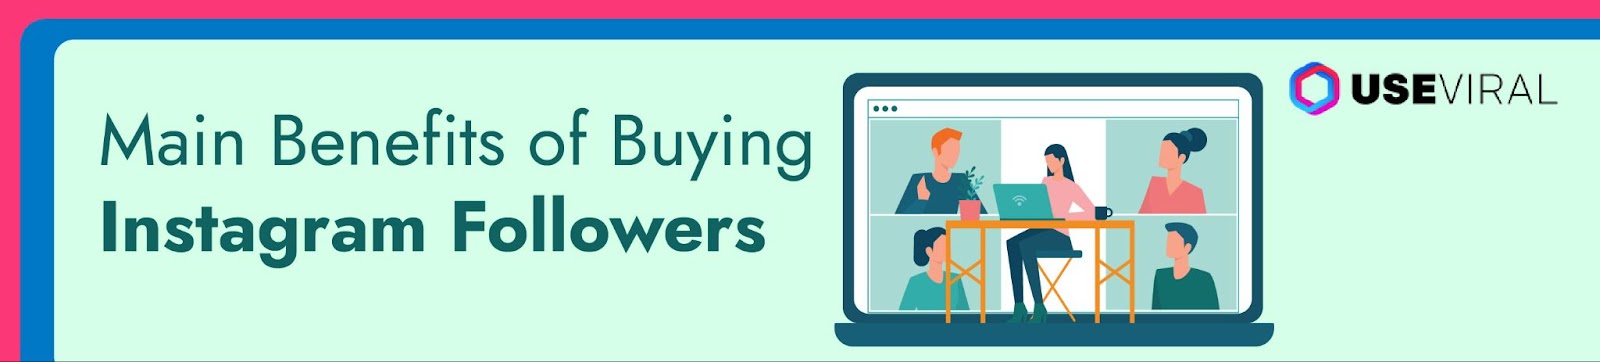 Main Benefits of Buying Instagram Followers 